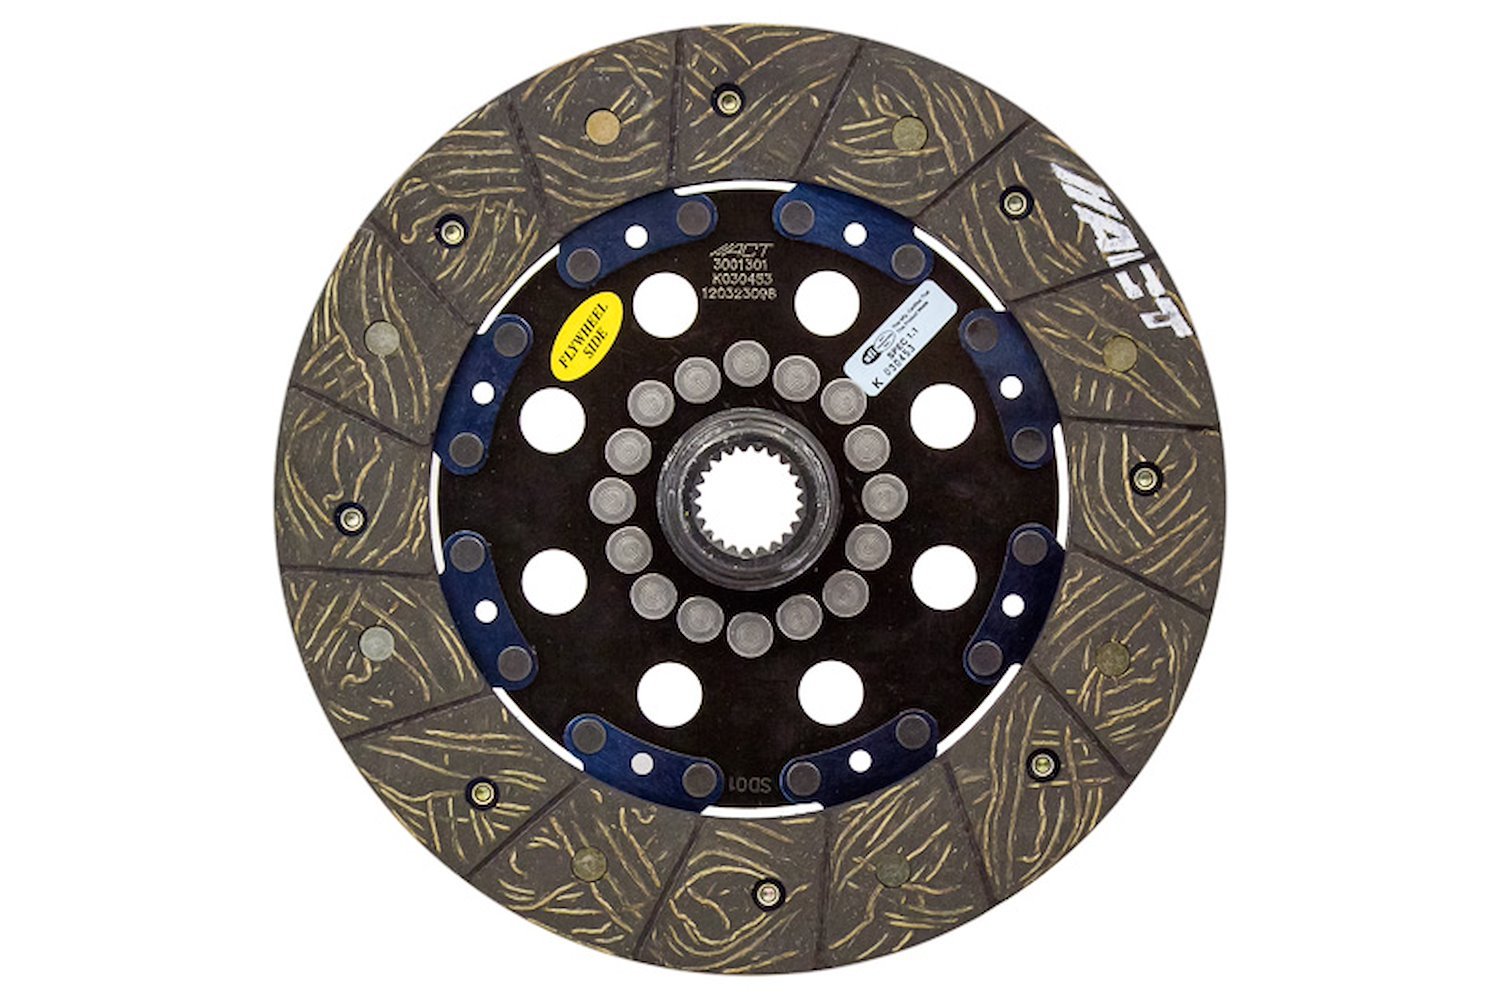 Performance Street Rigid Disc Transmission Clutch Friction Plate